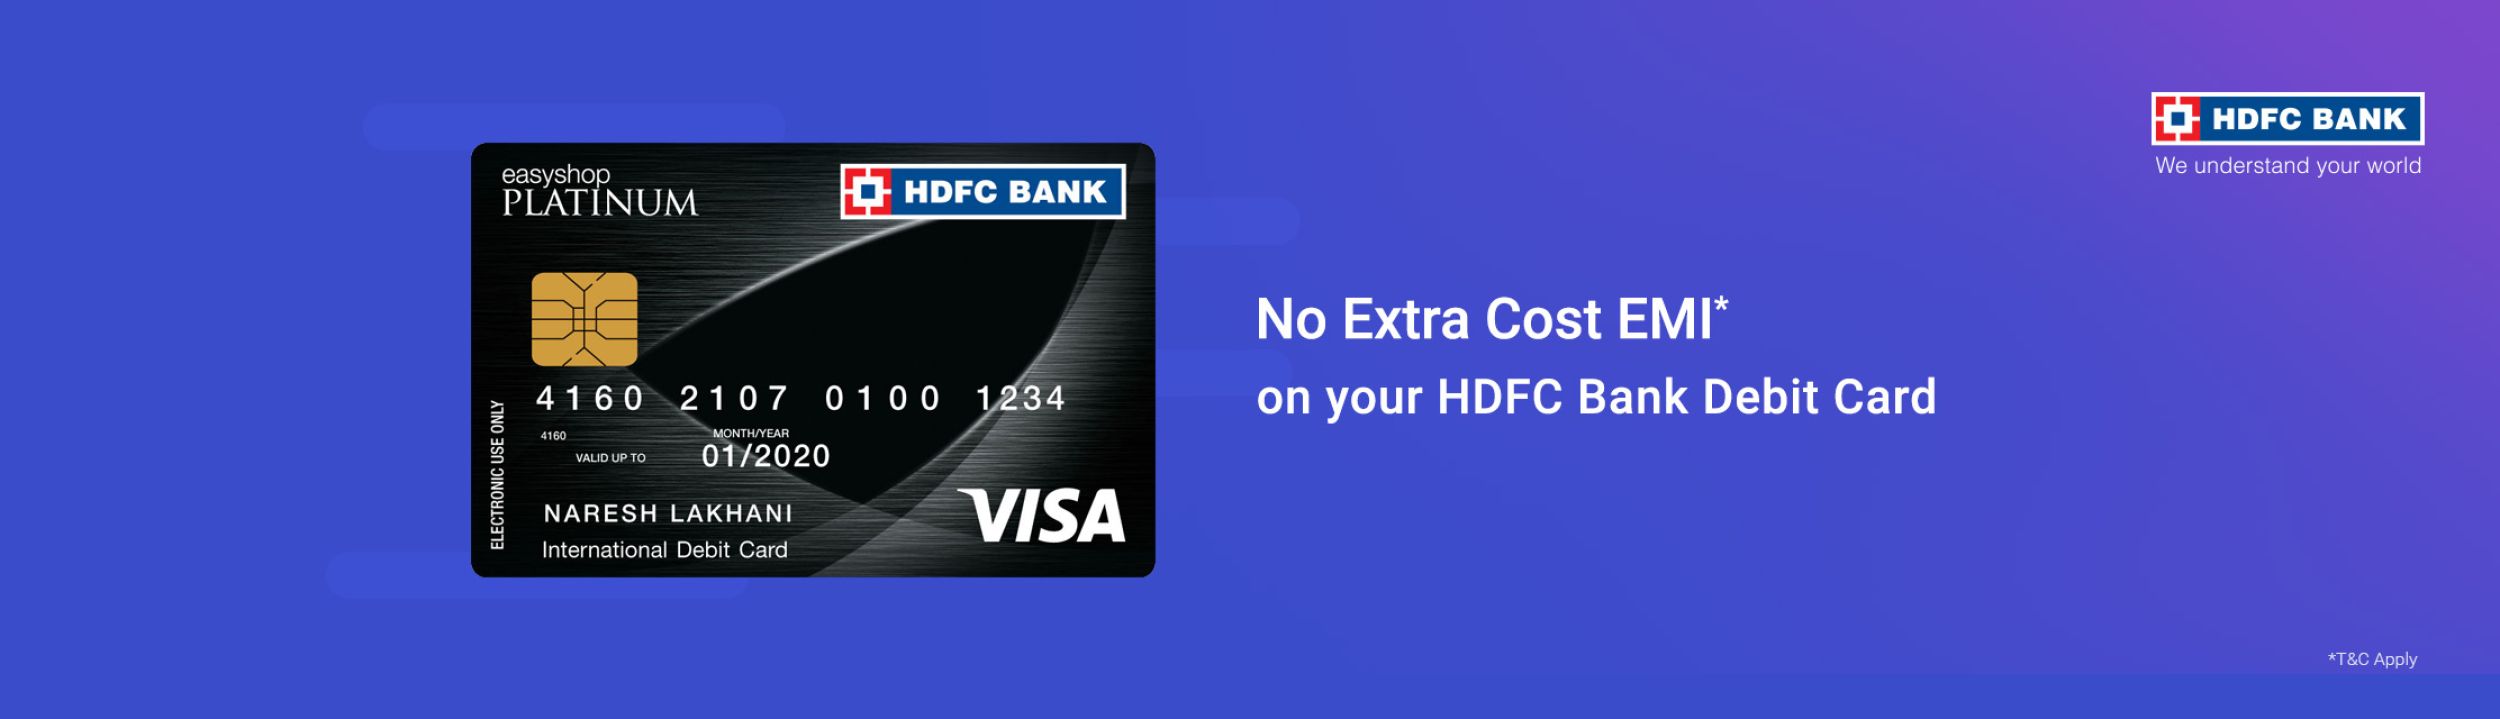 forex debit card hdfc